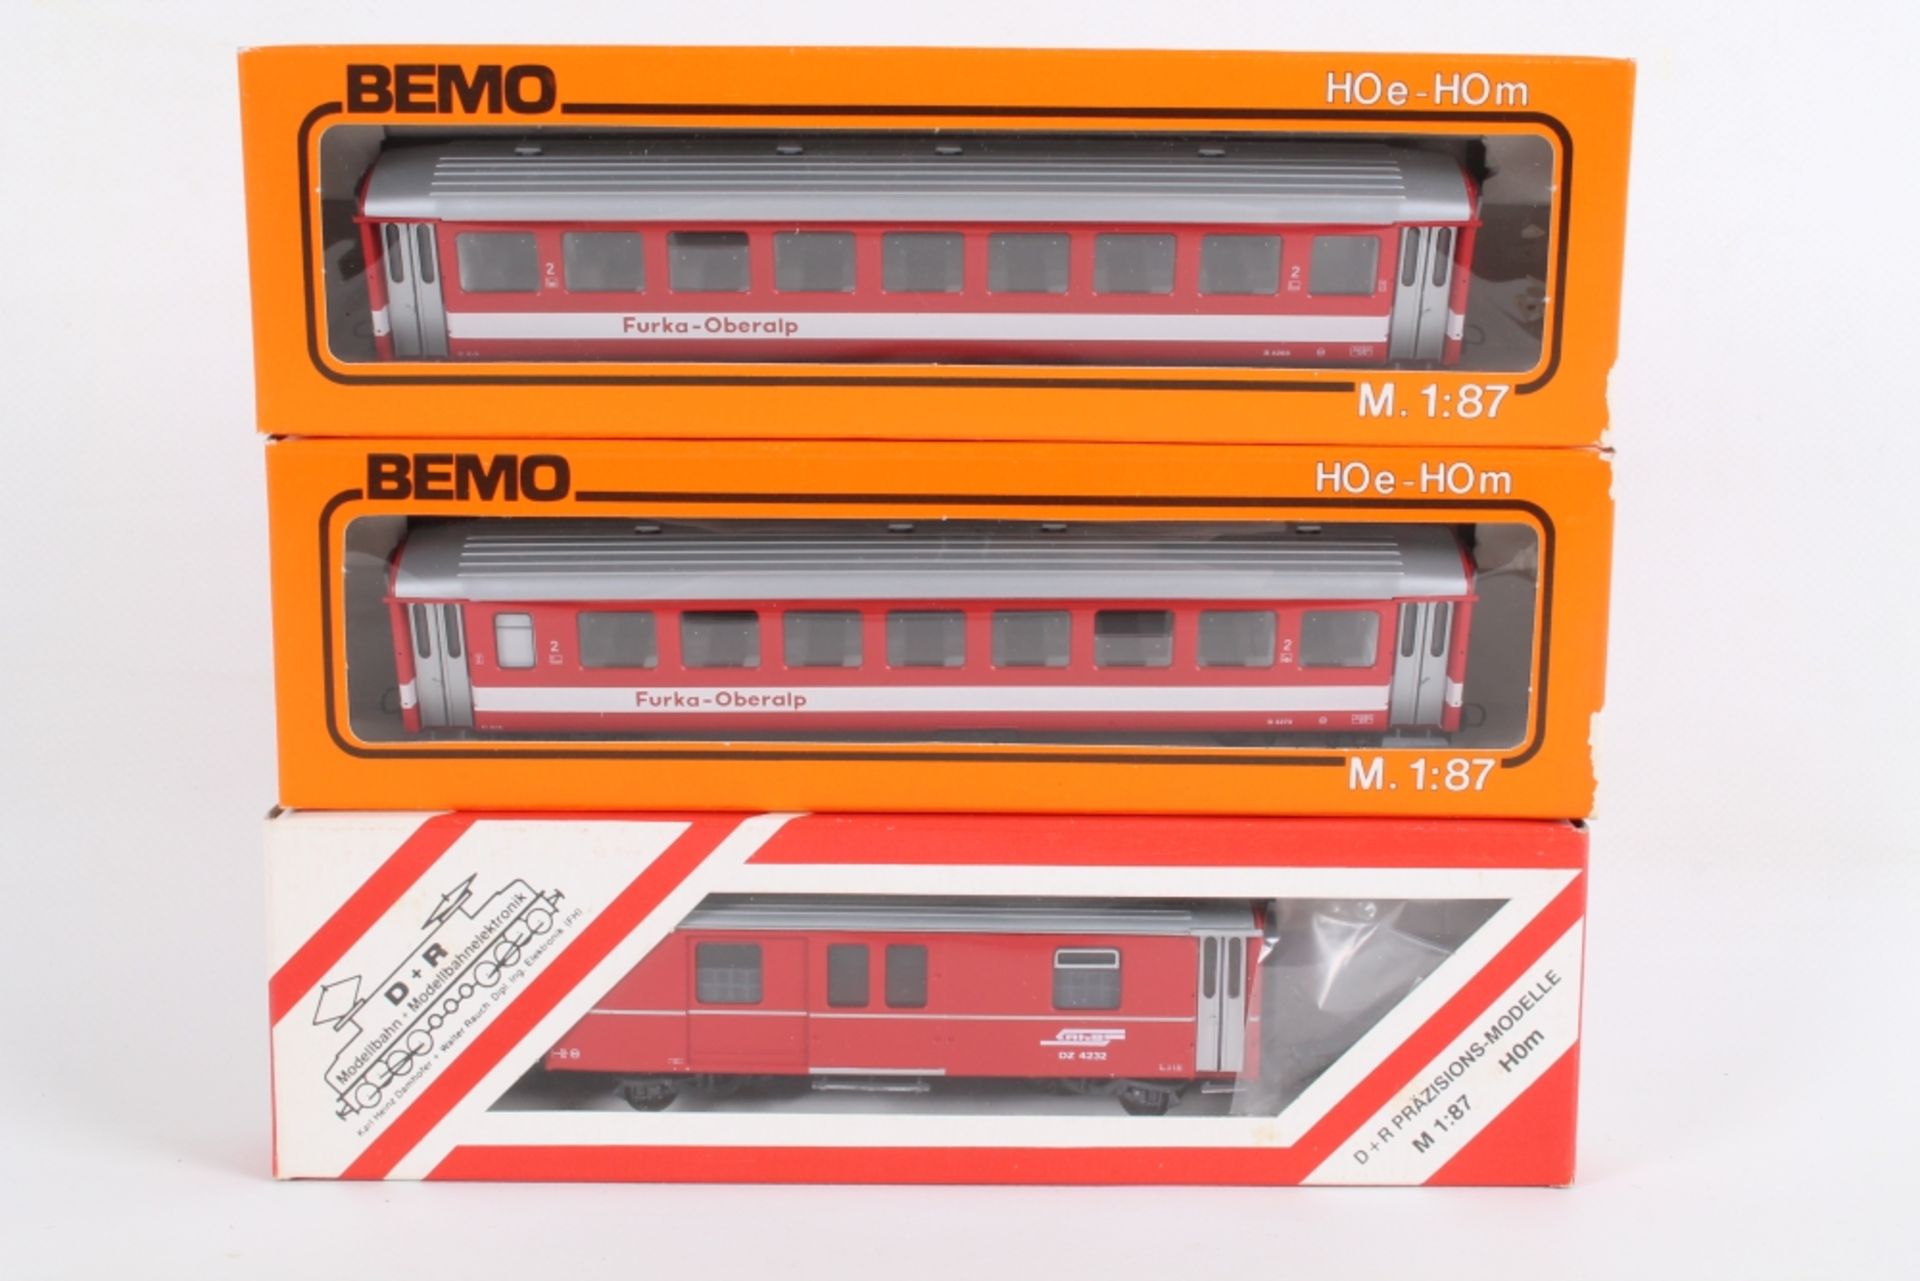 Bemo/D+R Modellbahn, drei Reisezugwagen